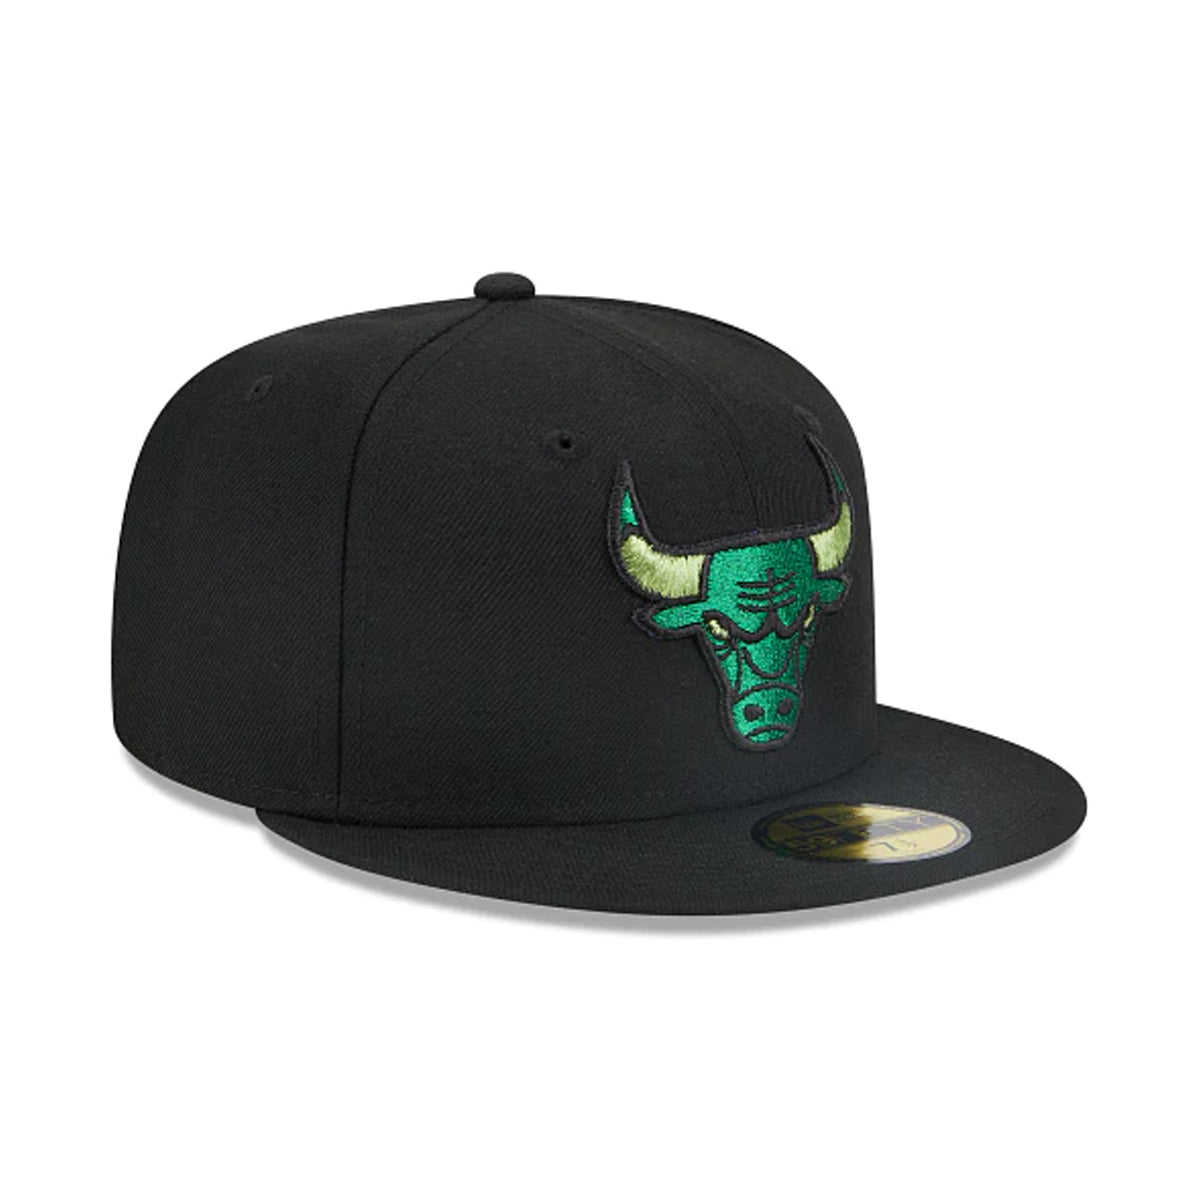 New Era Mens NBA Chicago Bulls Metallic Pop 59Fifty Fitted Hat